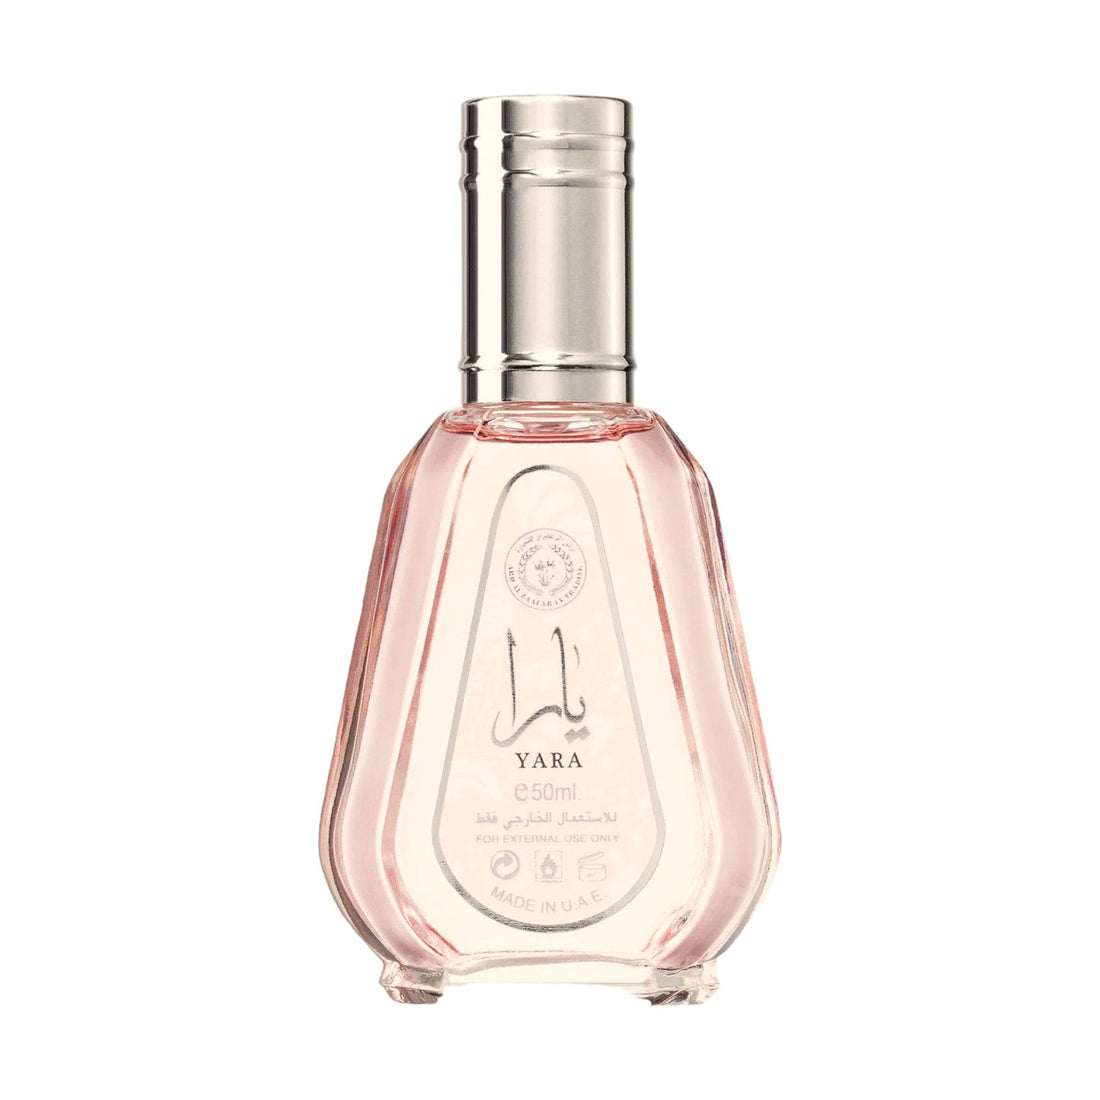 Yara 50ml Eau De Parfum by Ard Al Zaafaran, a bottle against a backdrop suggesting a tropical and floral ambiance.